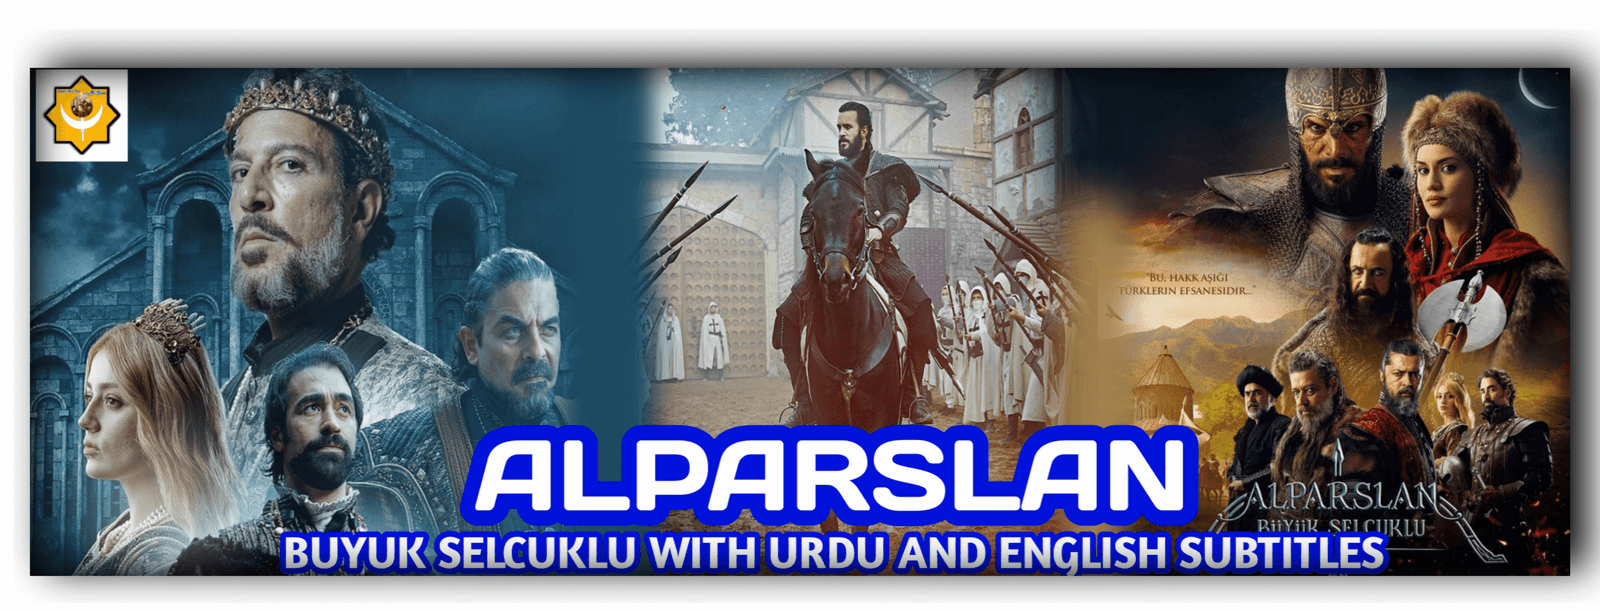 Watch Alparslan Buyuk Selcuklu With urdu And English Subtitles